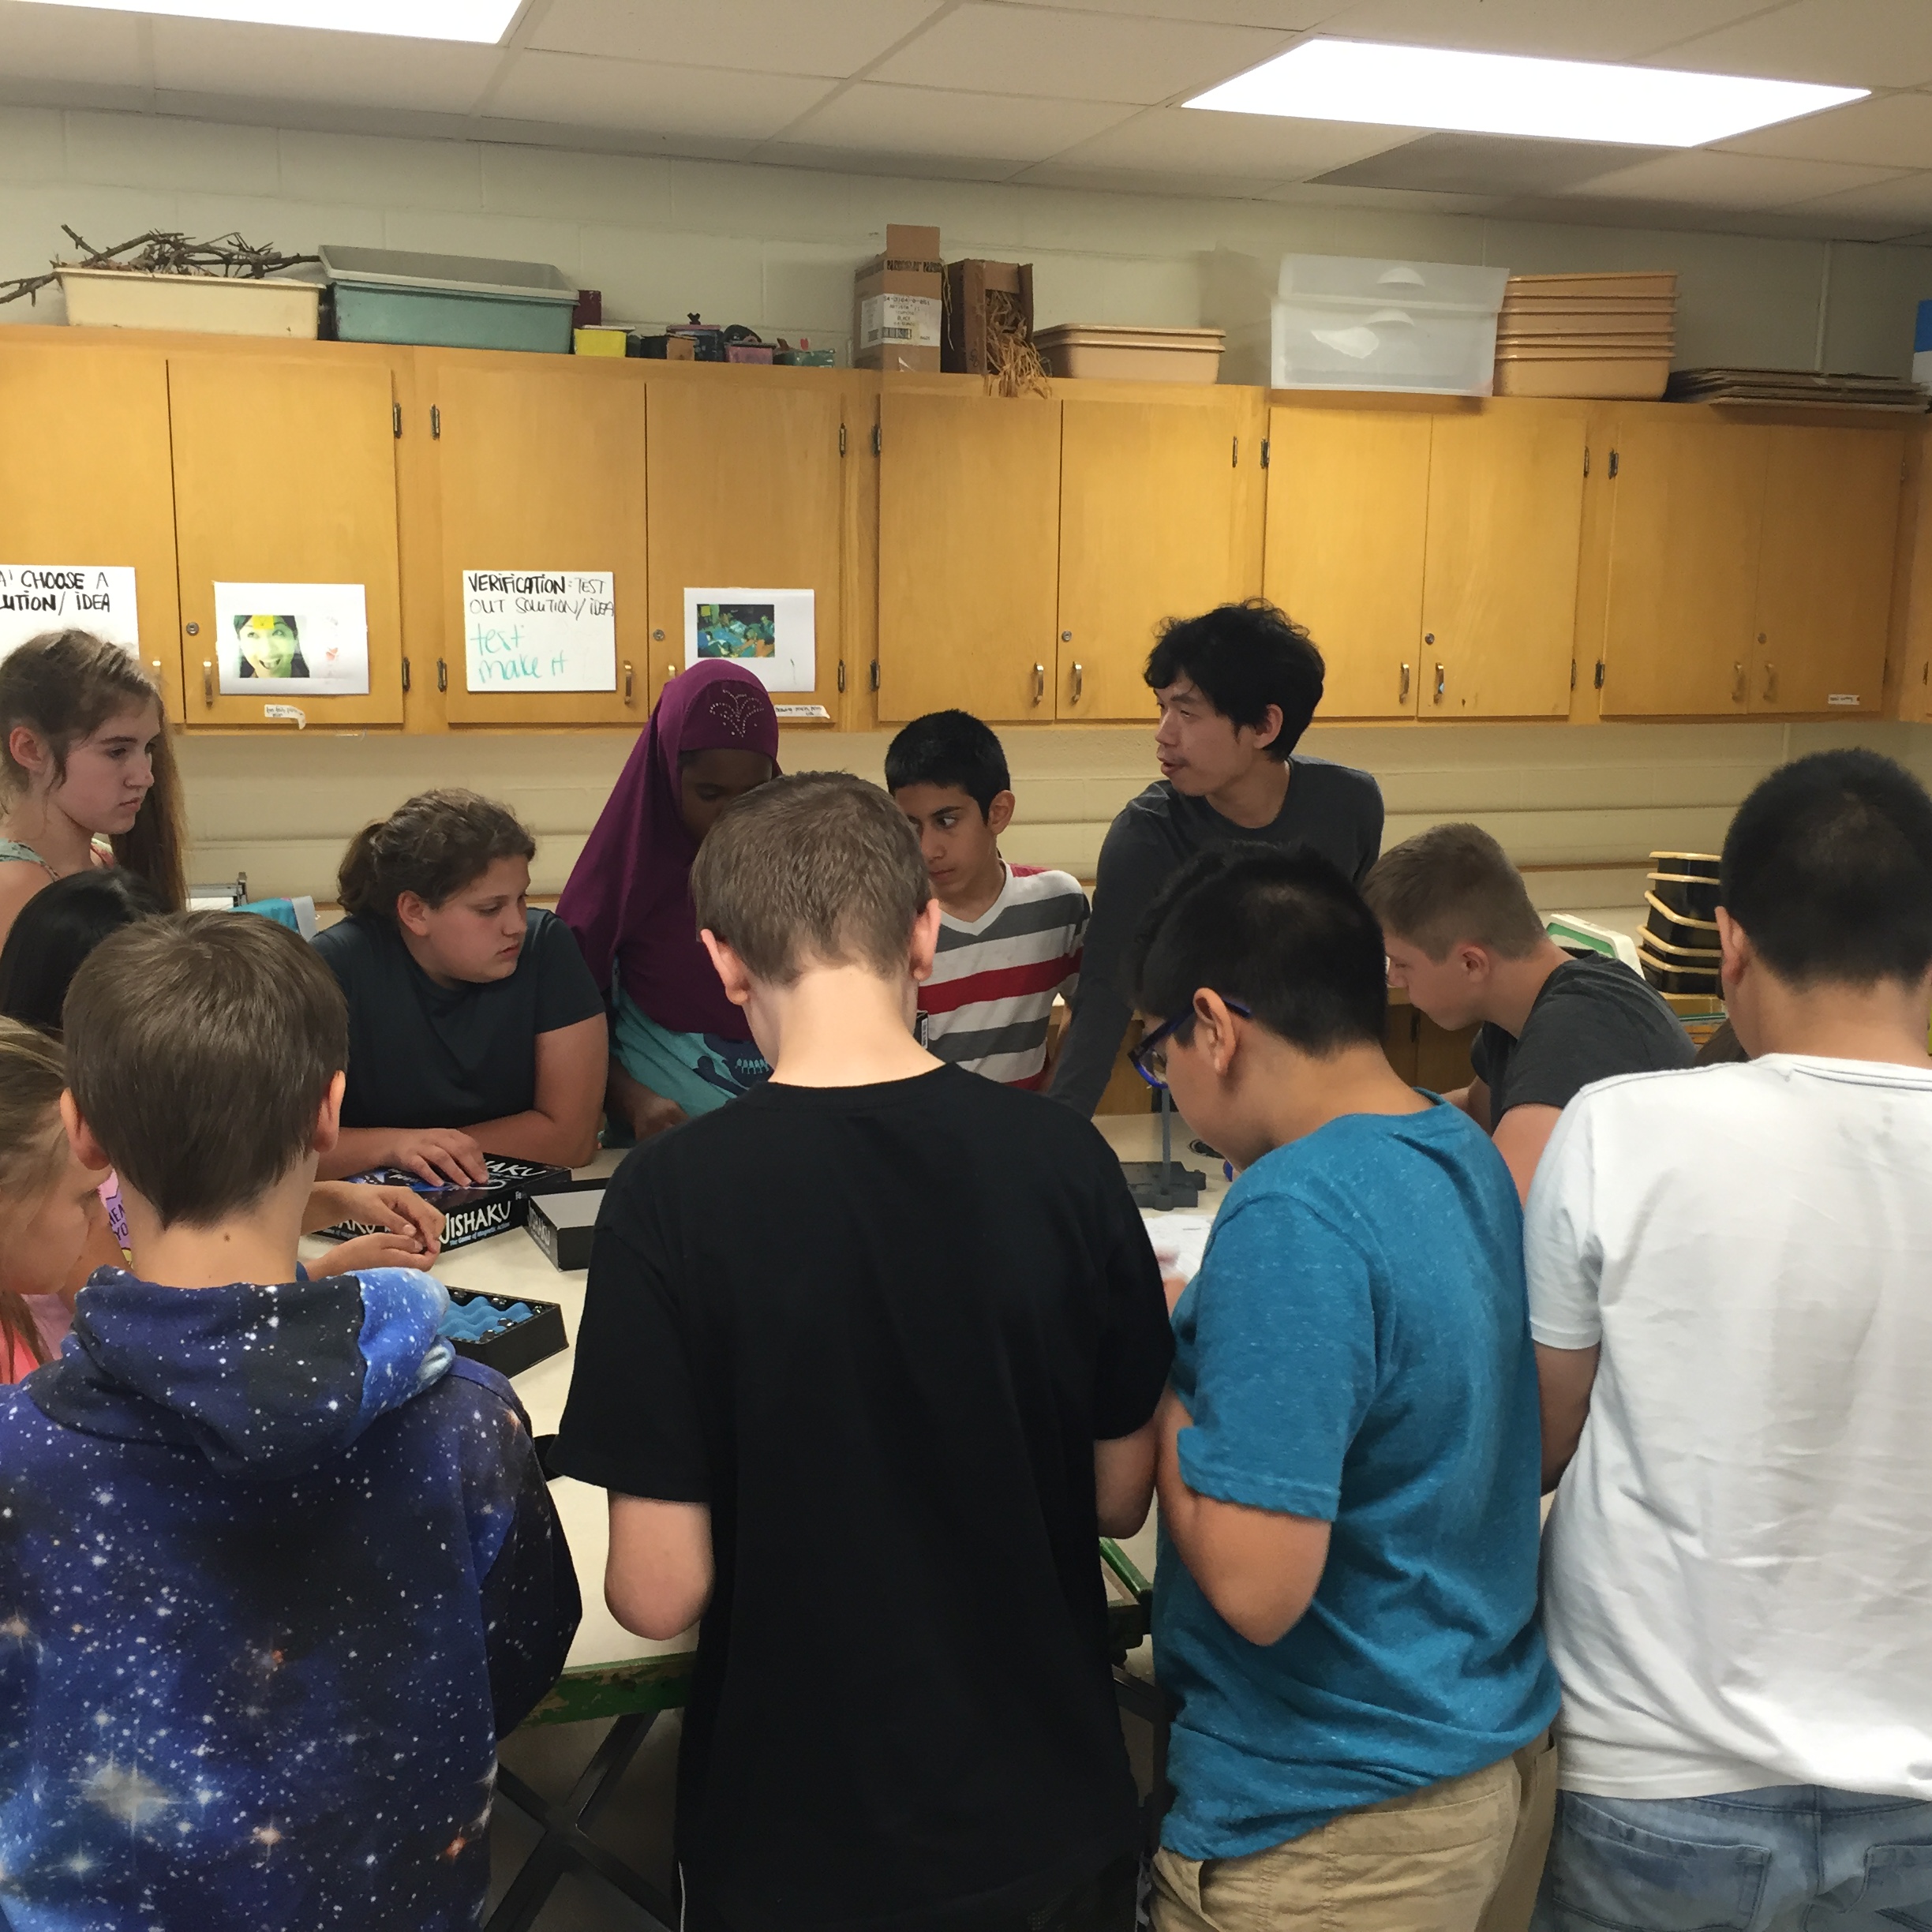 Professor Xu surveys students working on lab apparatus